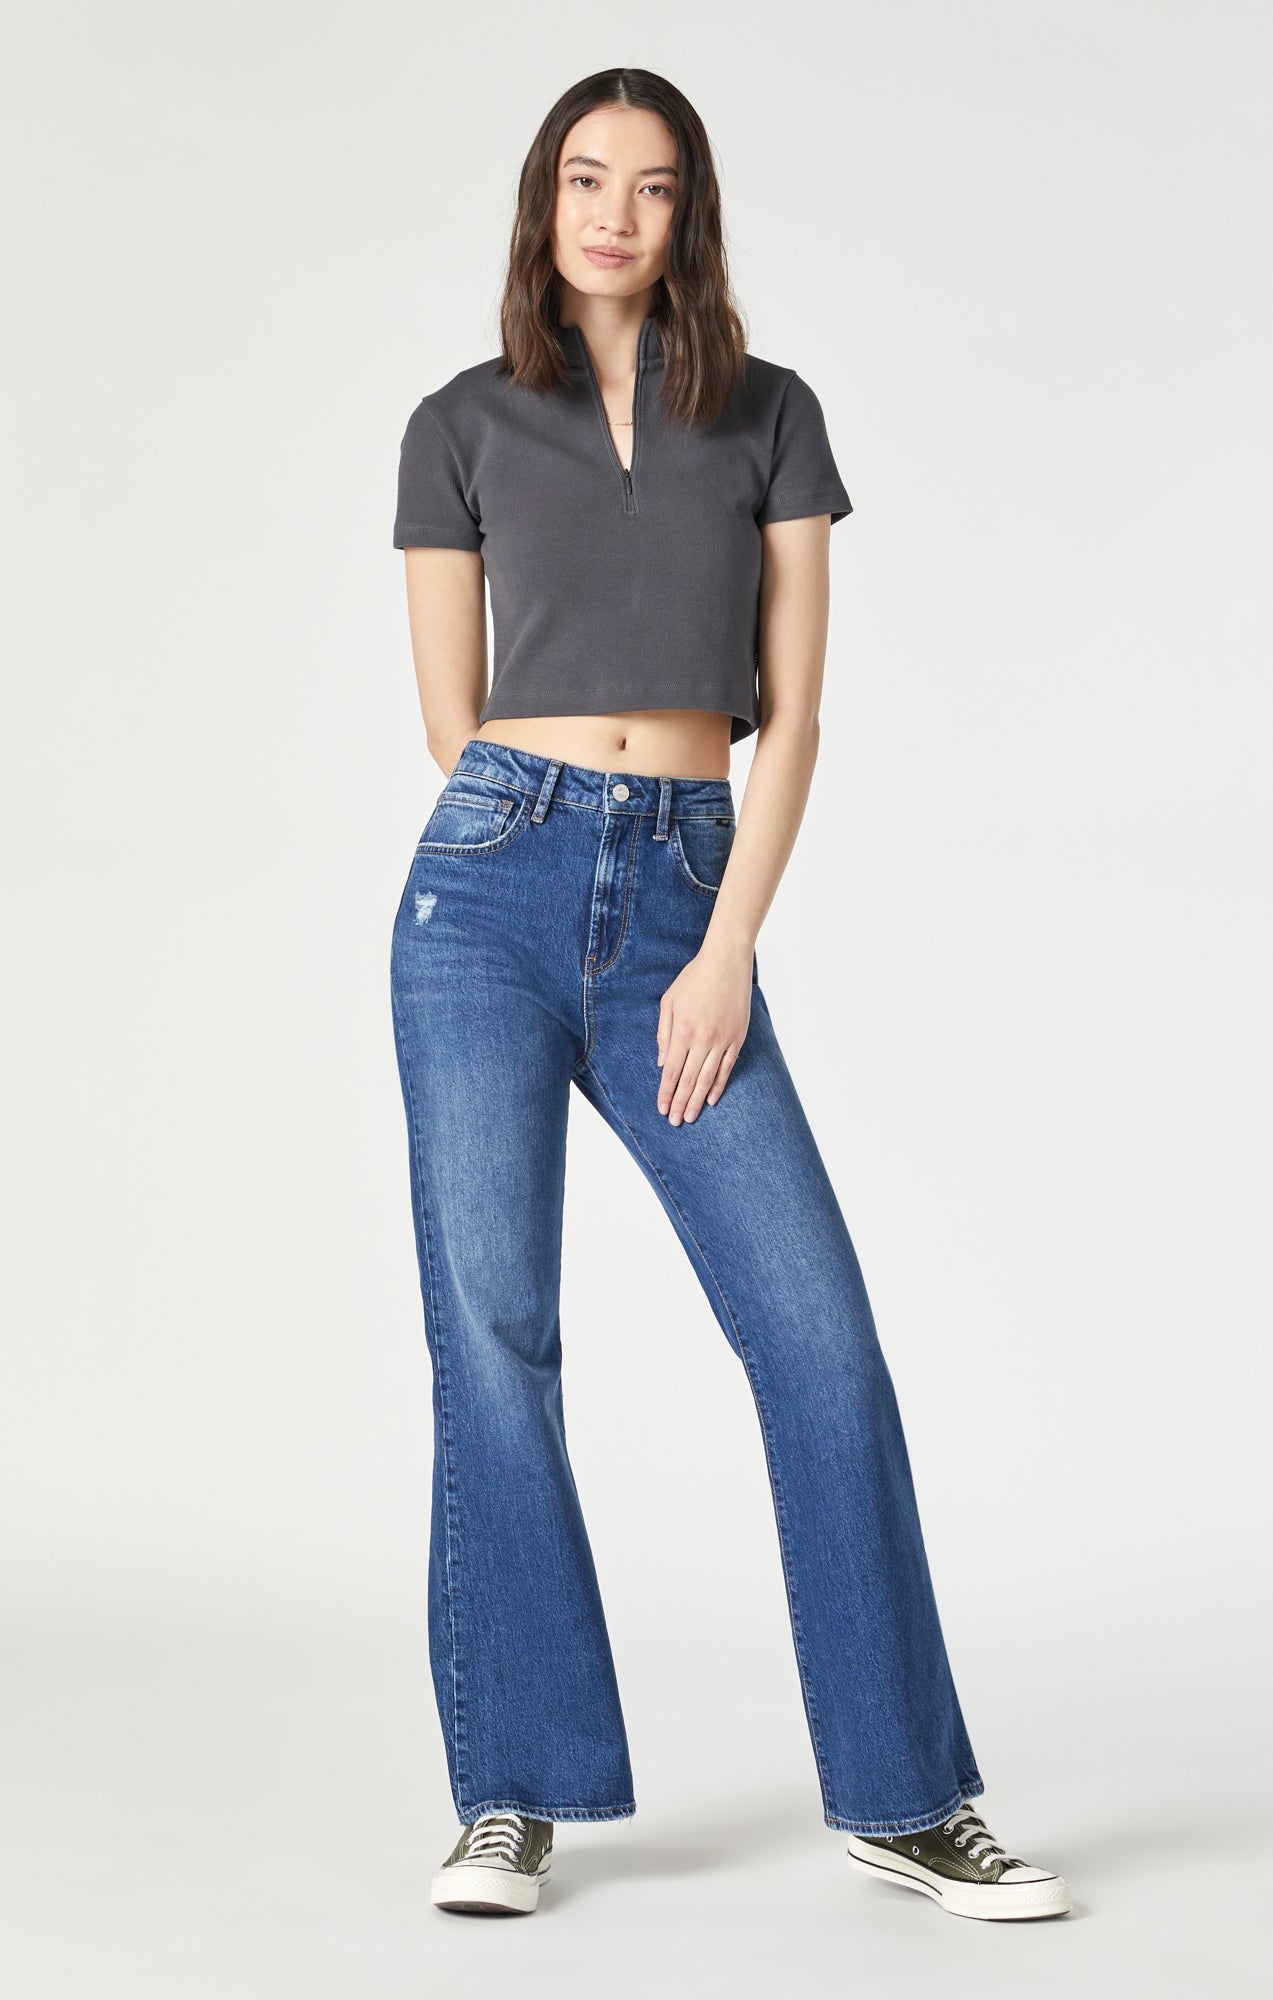 ASOS DESIGN Tall flared jeans in dark blue